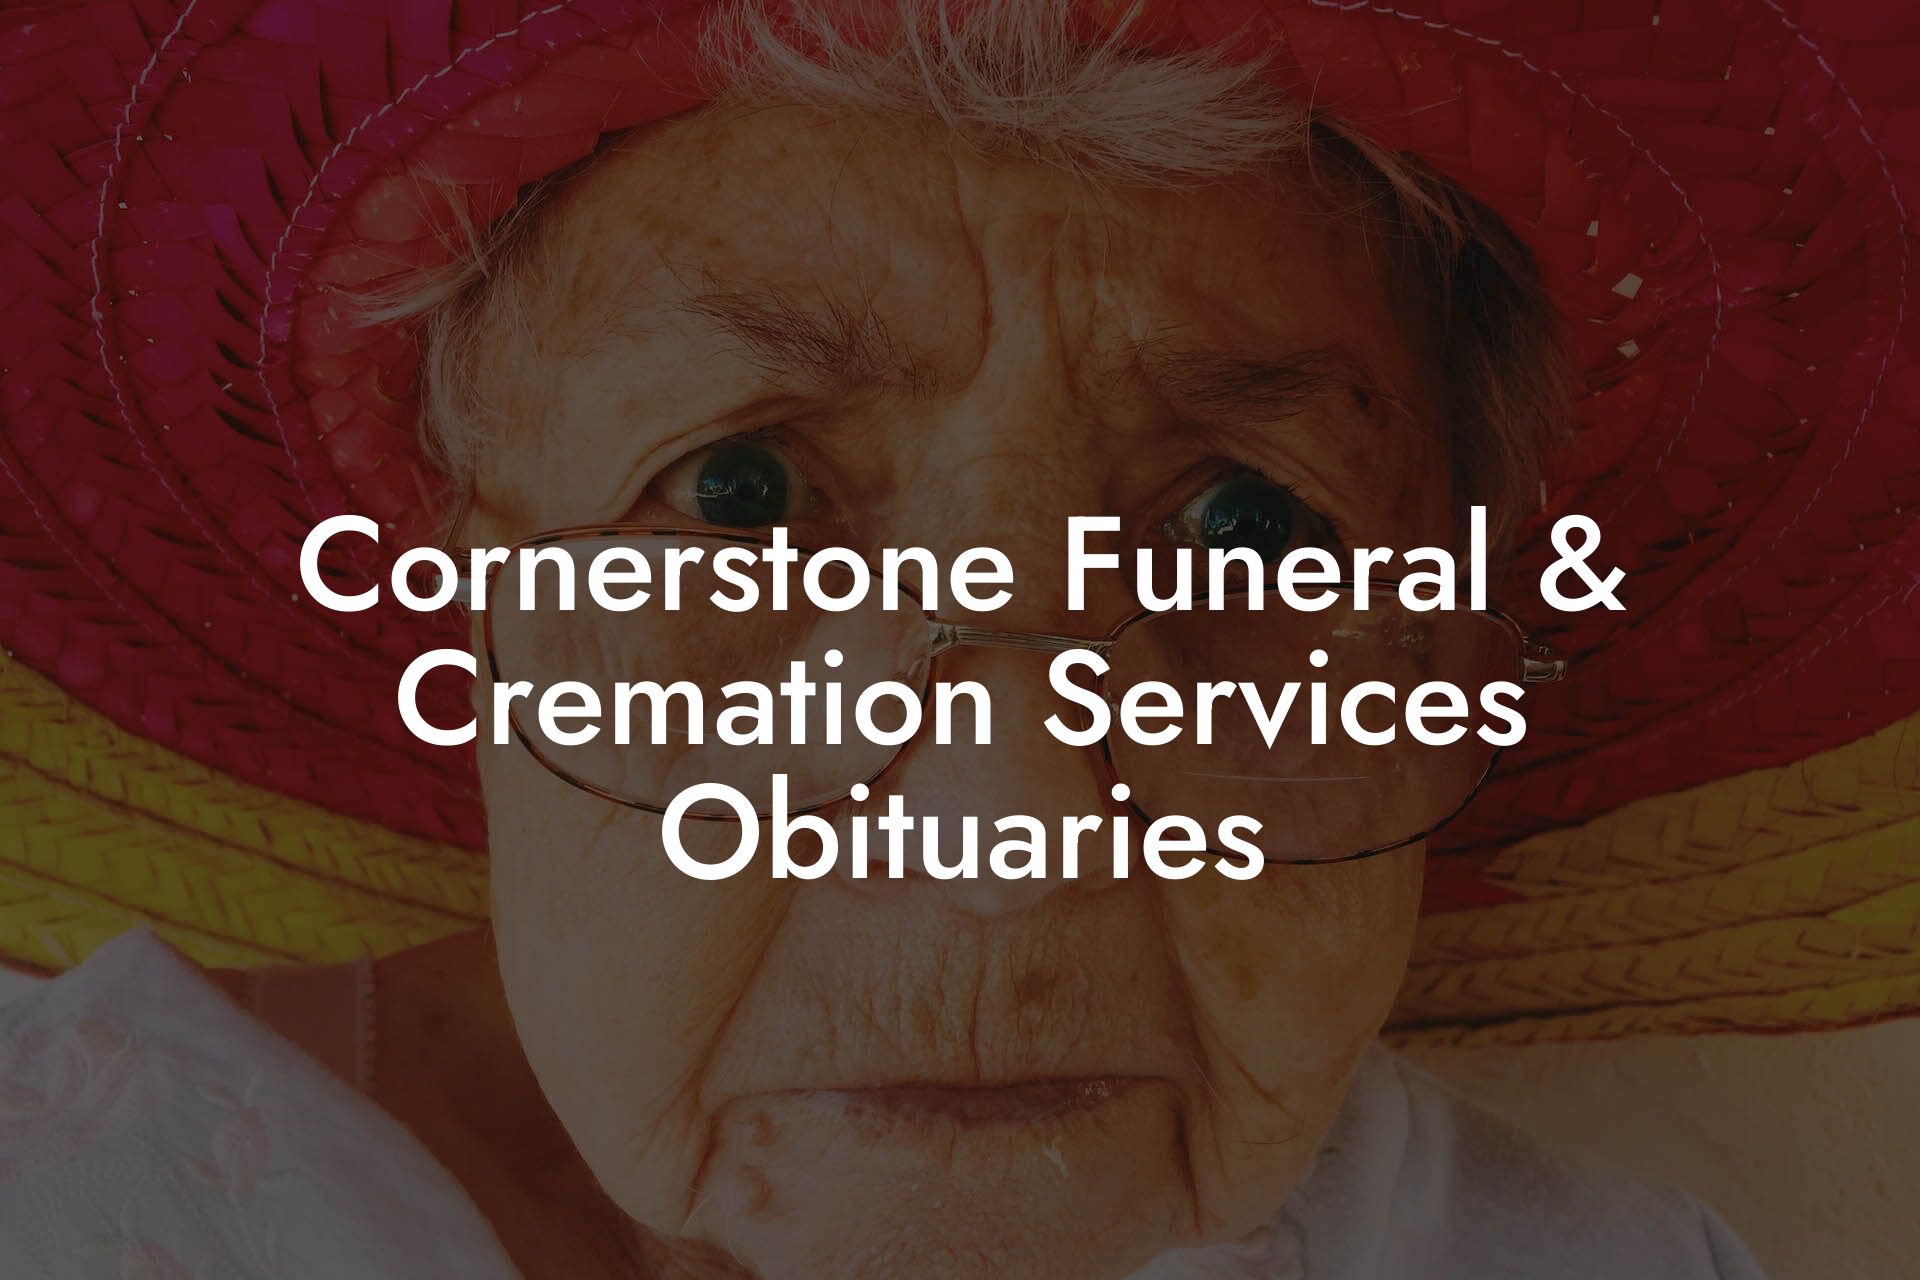 Cornerstone Funeral & Cremation Services Obituaries